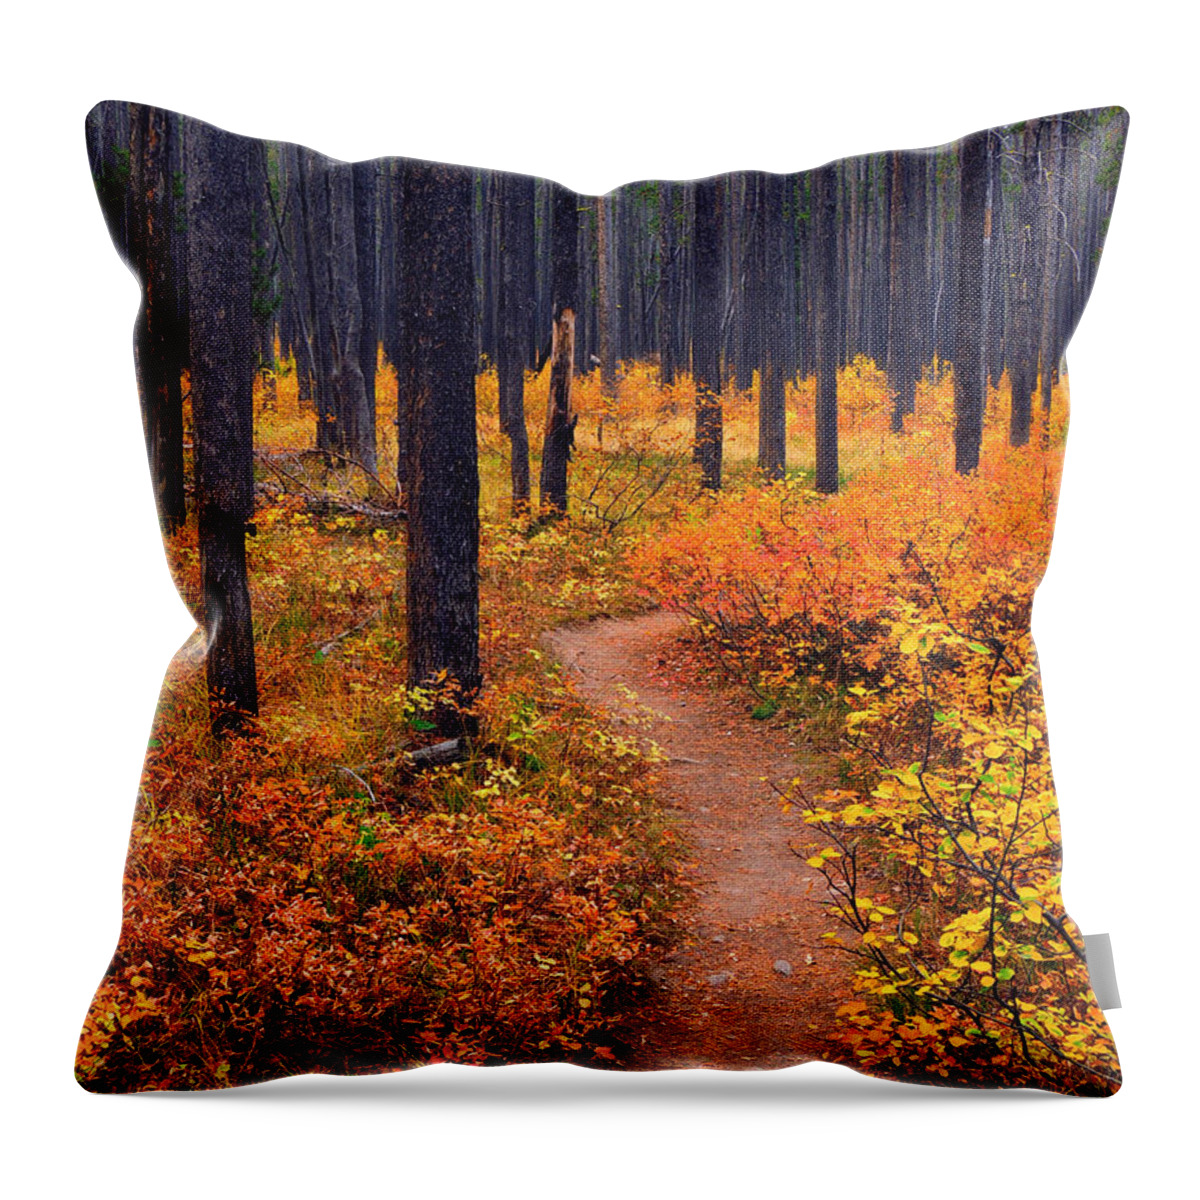 Yellowstone Throw Pillow featuring the photograph Autumn in Yellowstone by Raymond Salani III